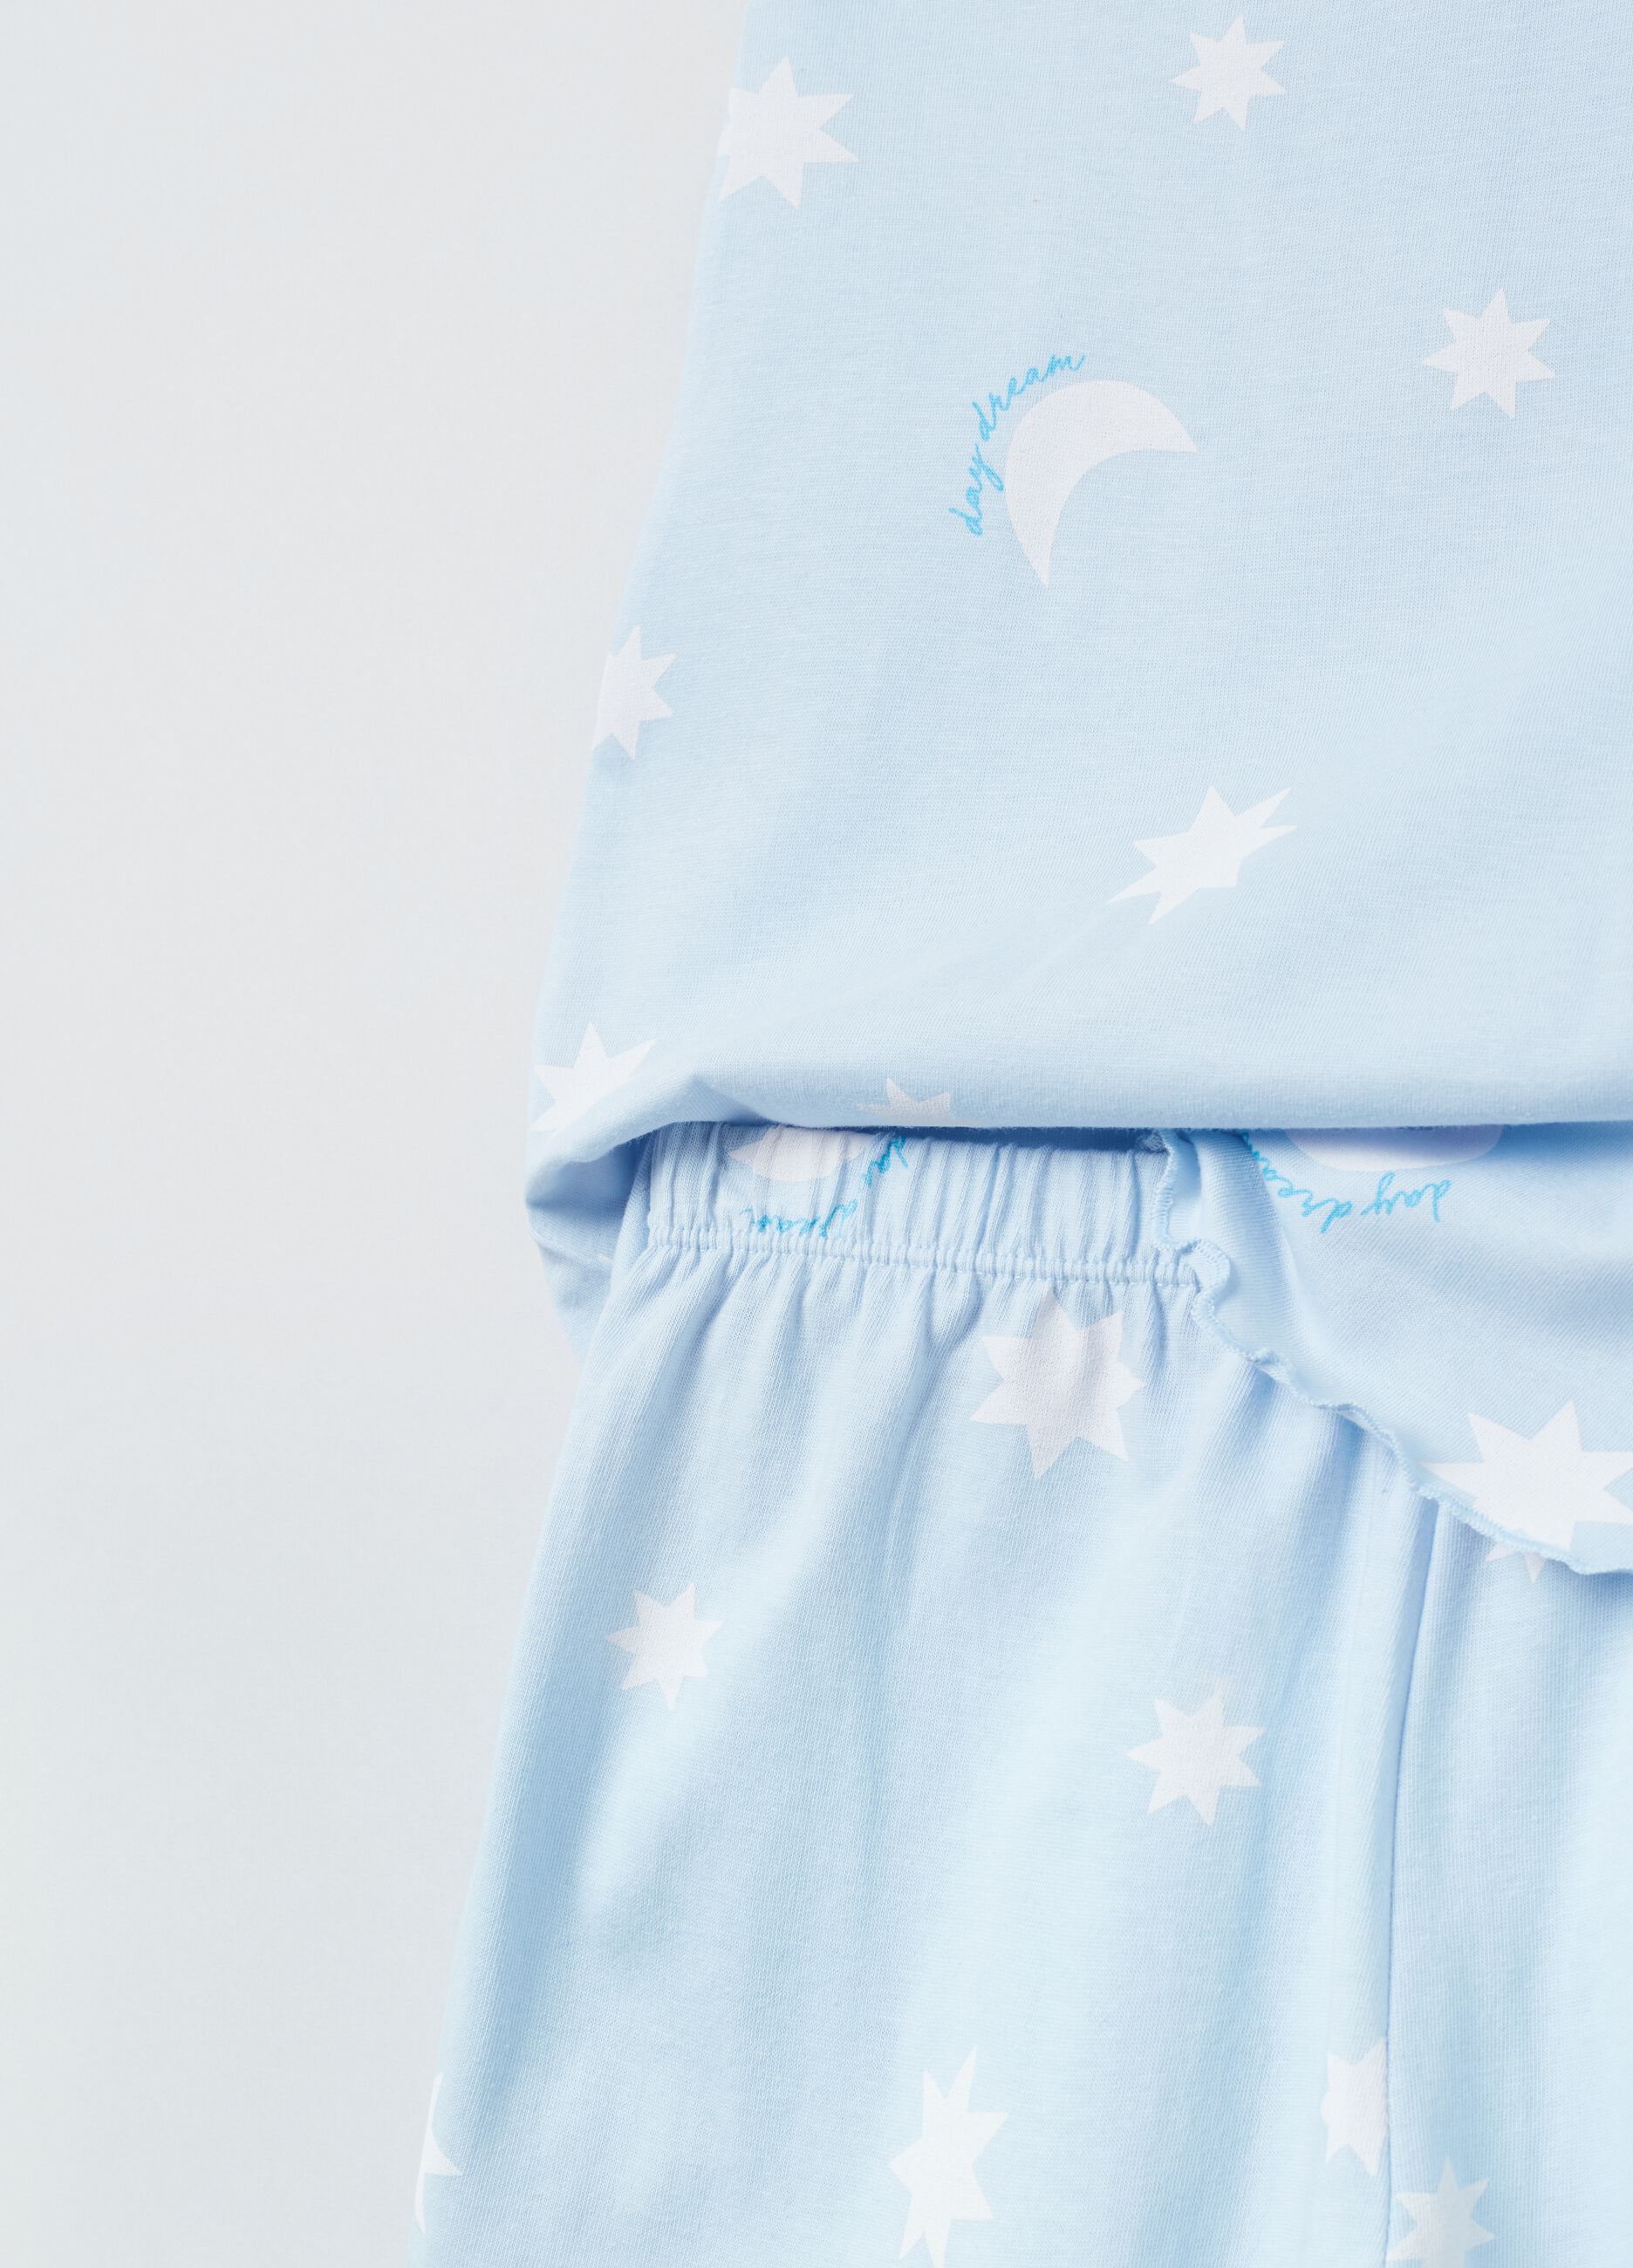 Short pyjamas with moon and stars print